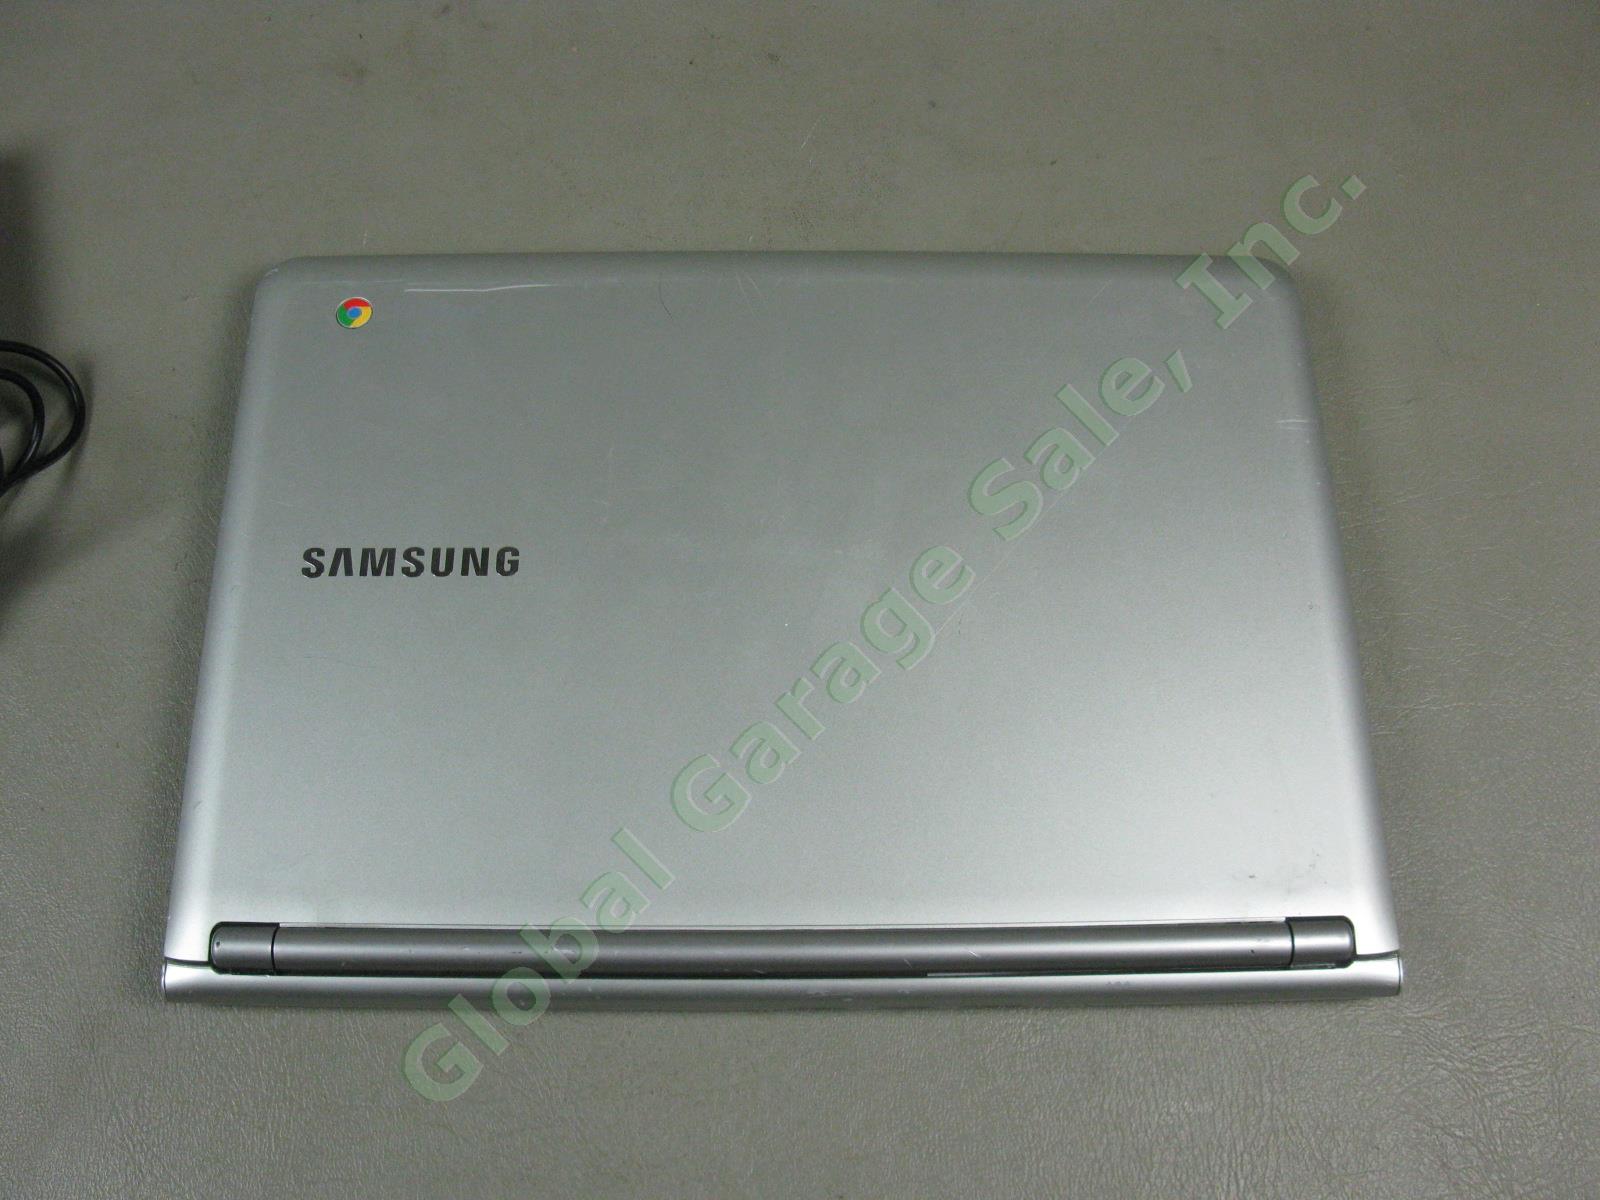 Samsung Chromebook Netbook Computer XE303C12 11.6" 1.7 GHz 2GB RAM 16GB NO RES! 2